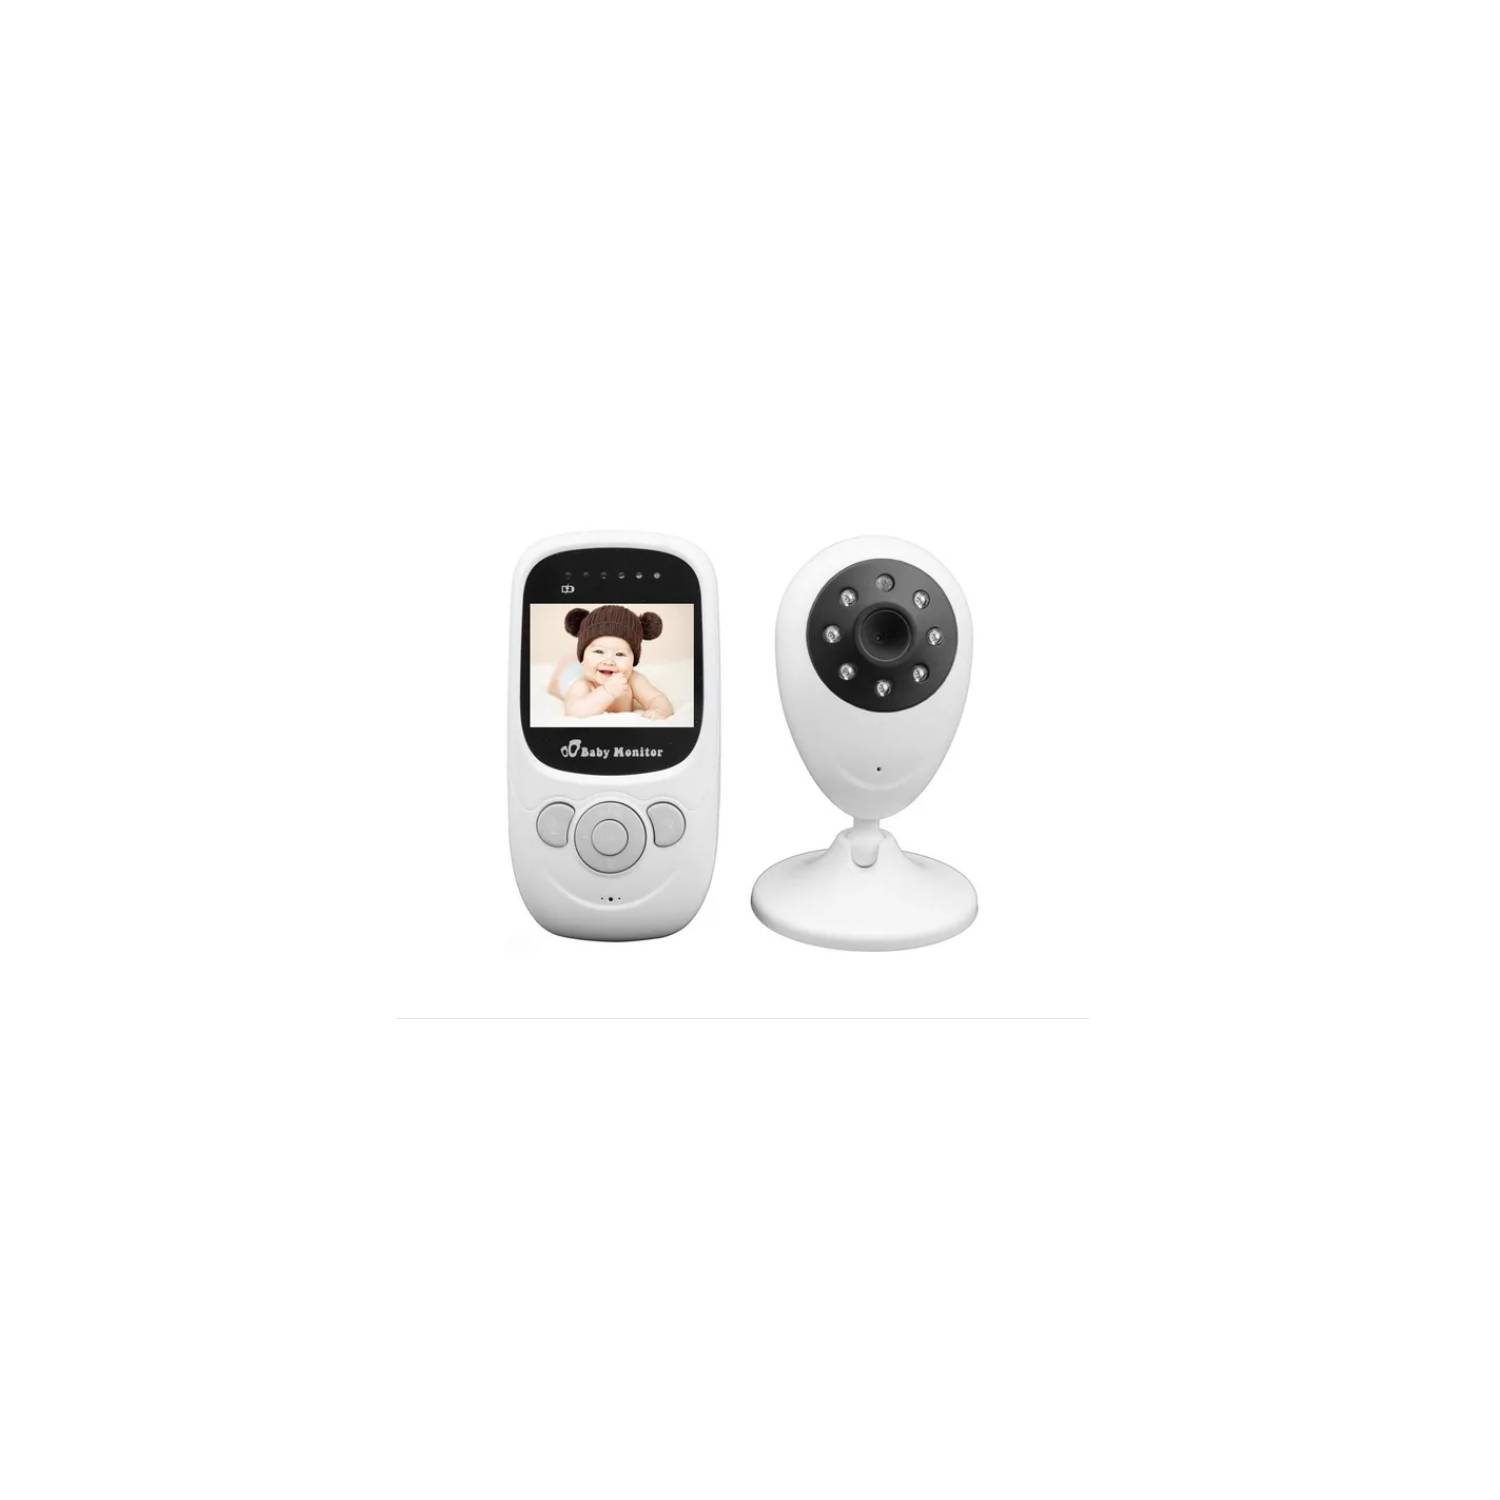 Monitor Camara LCD Vigilancia Bebes Wifi Video Vision Nocturna Sp-880